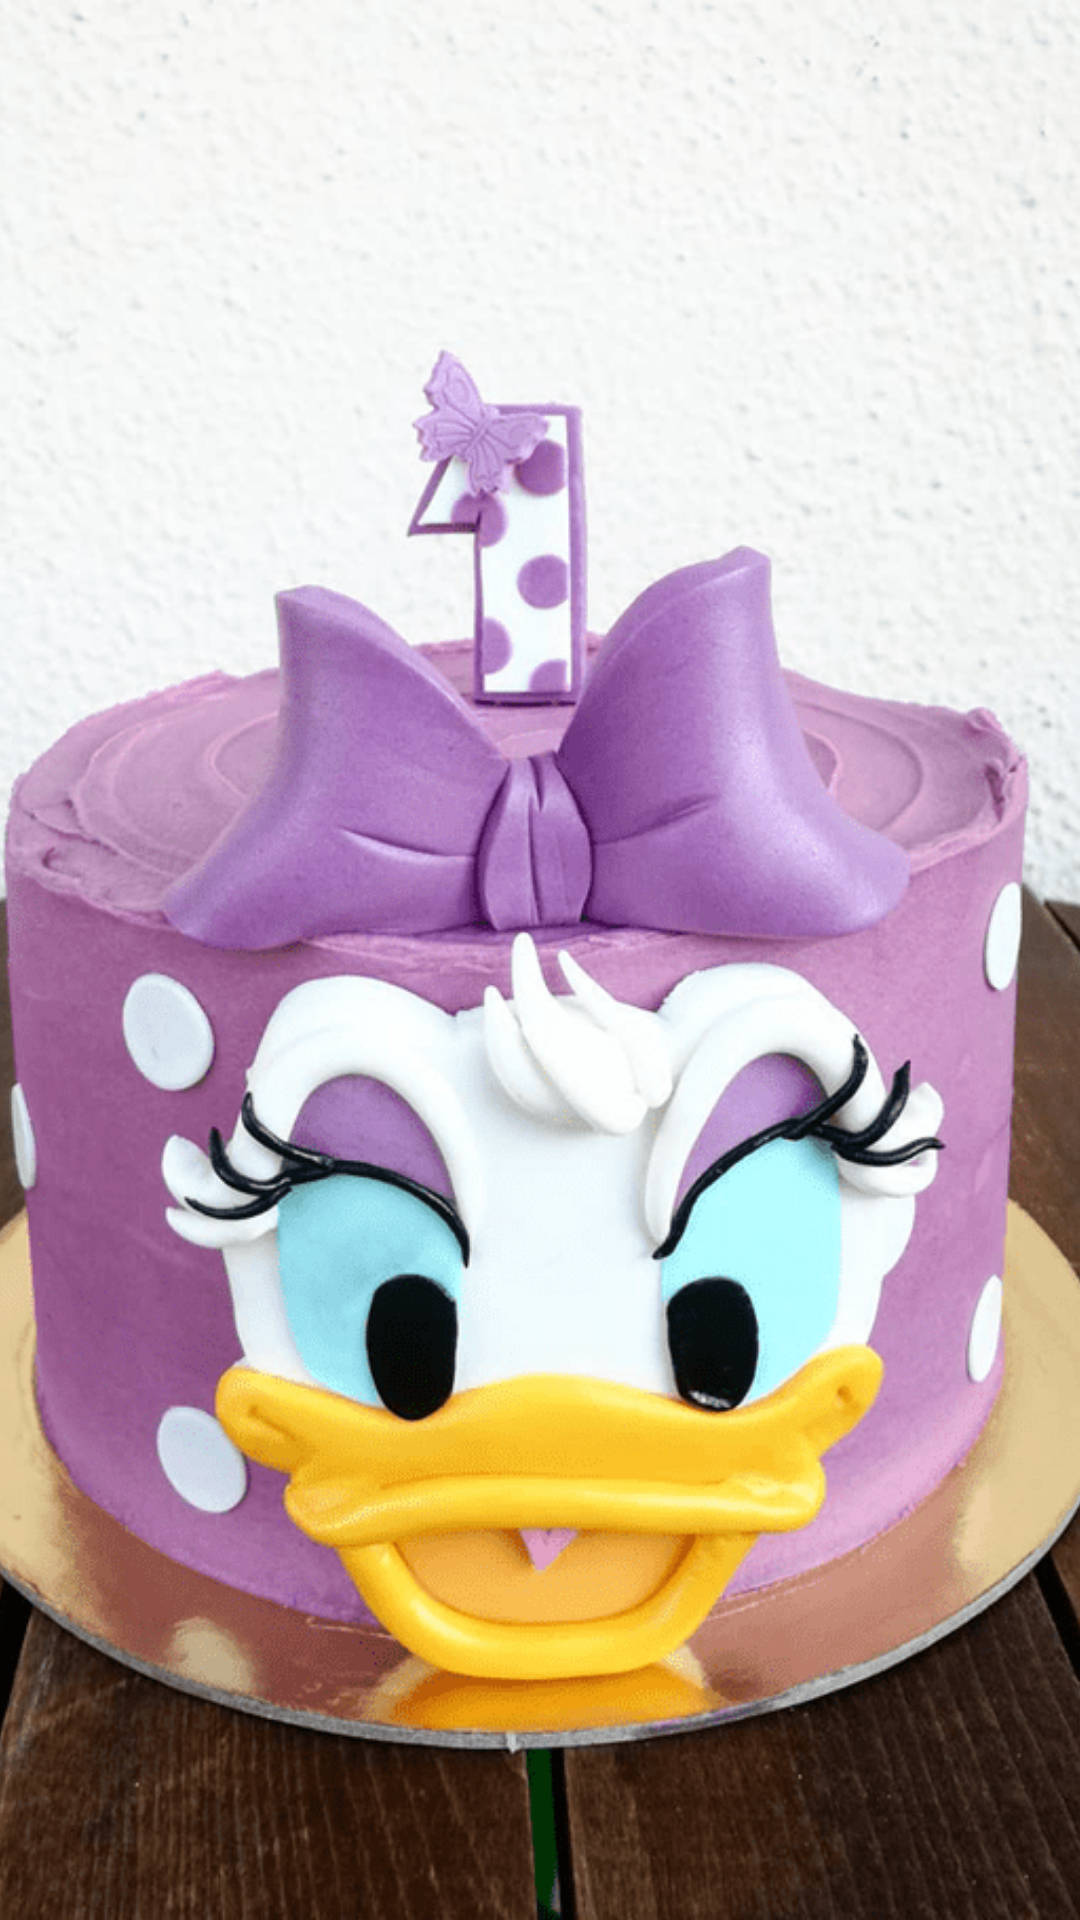 Donald Duck - CakeCentral.com